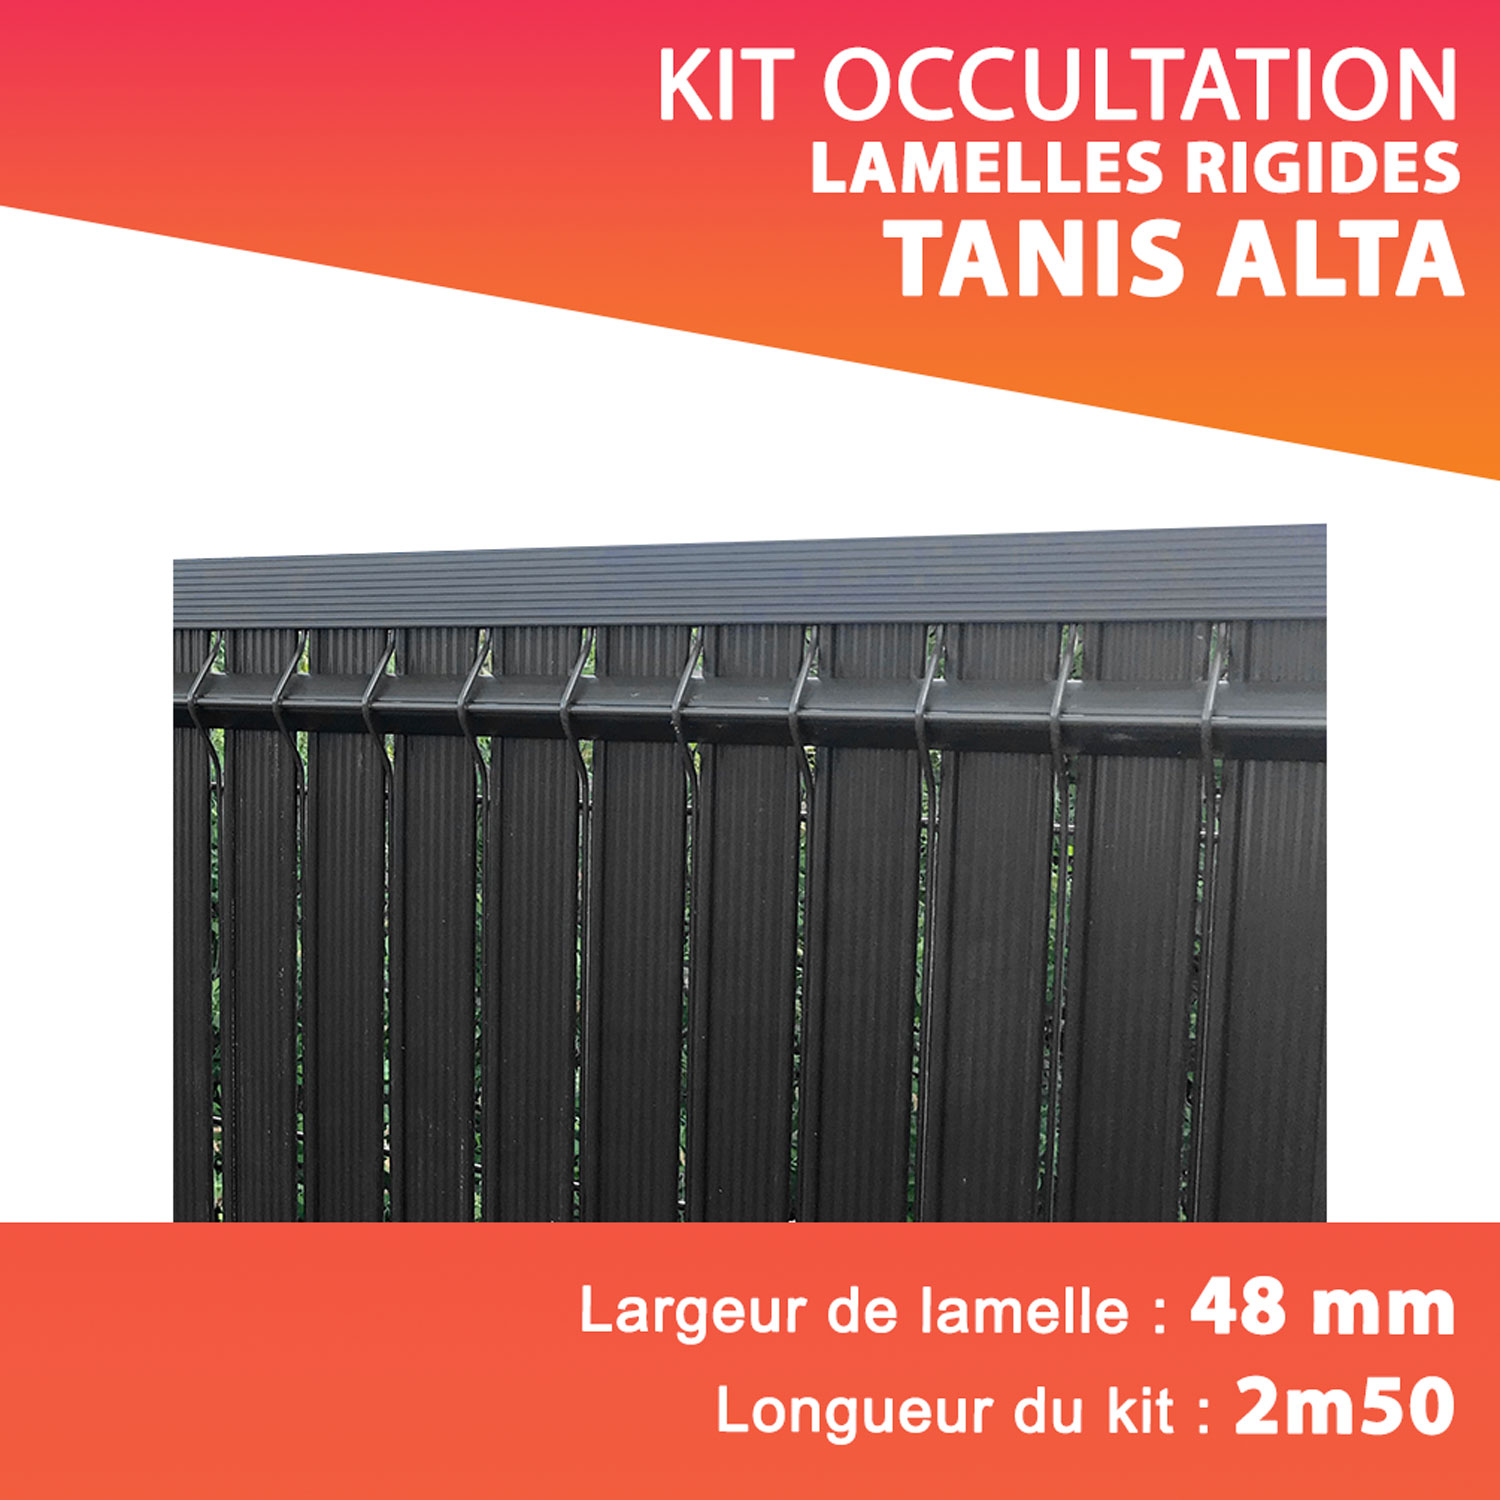 Kit TANIS ALTA lamelles rigides occultantes Lg. 2m50 lamelle 48 mm